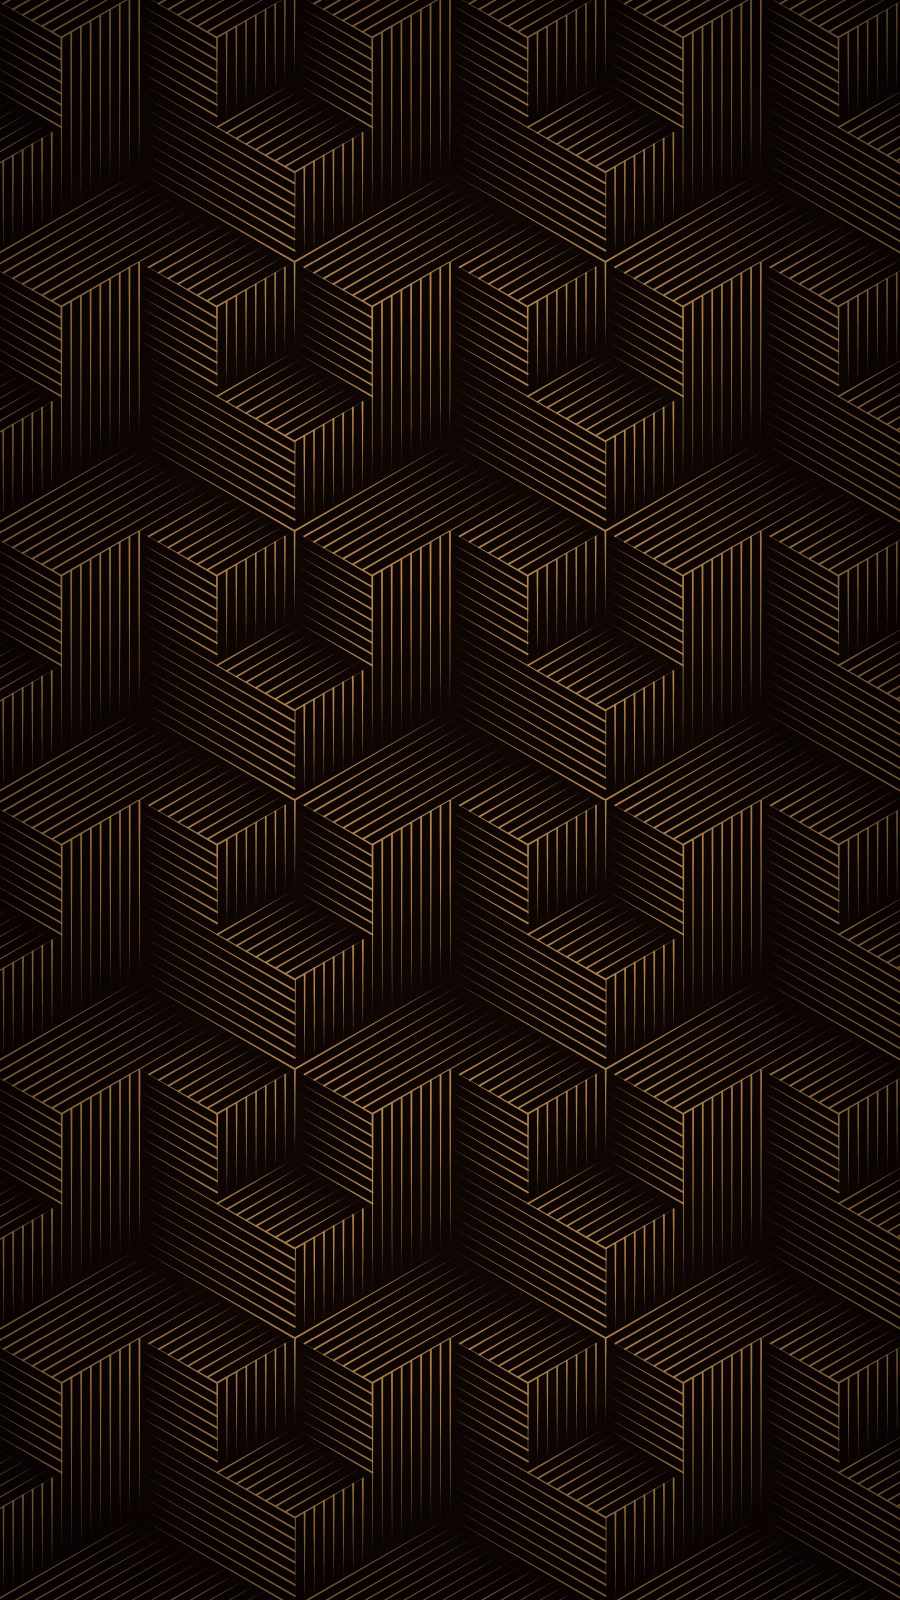 3D Blocks IPhone Wallpaper Wallpaper, iPhone Wallpaper